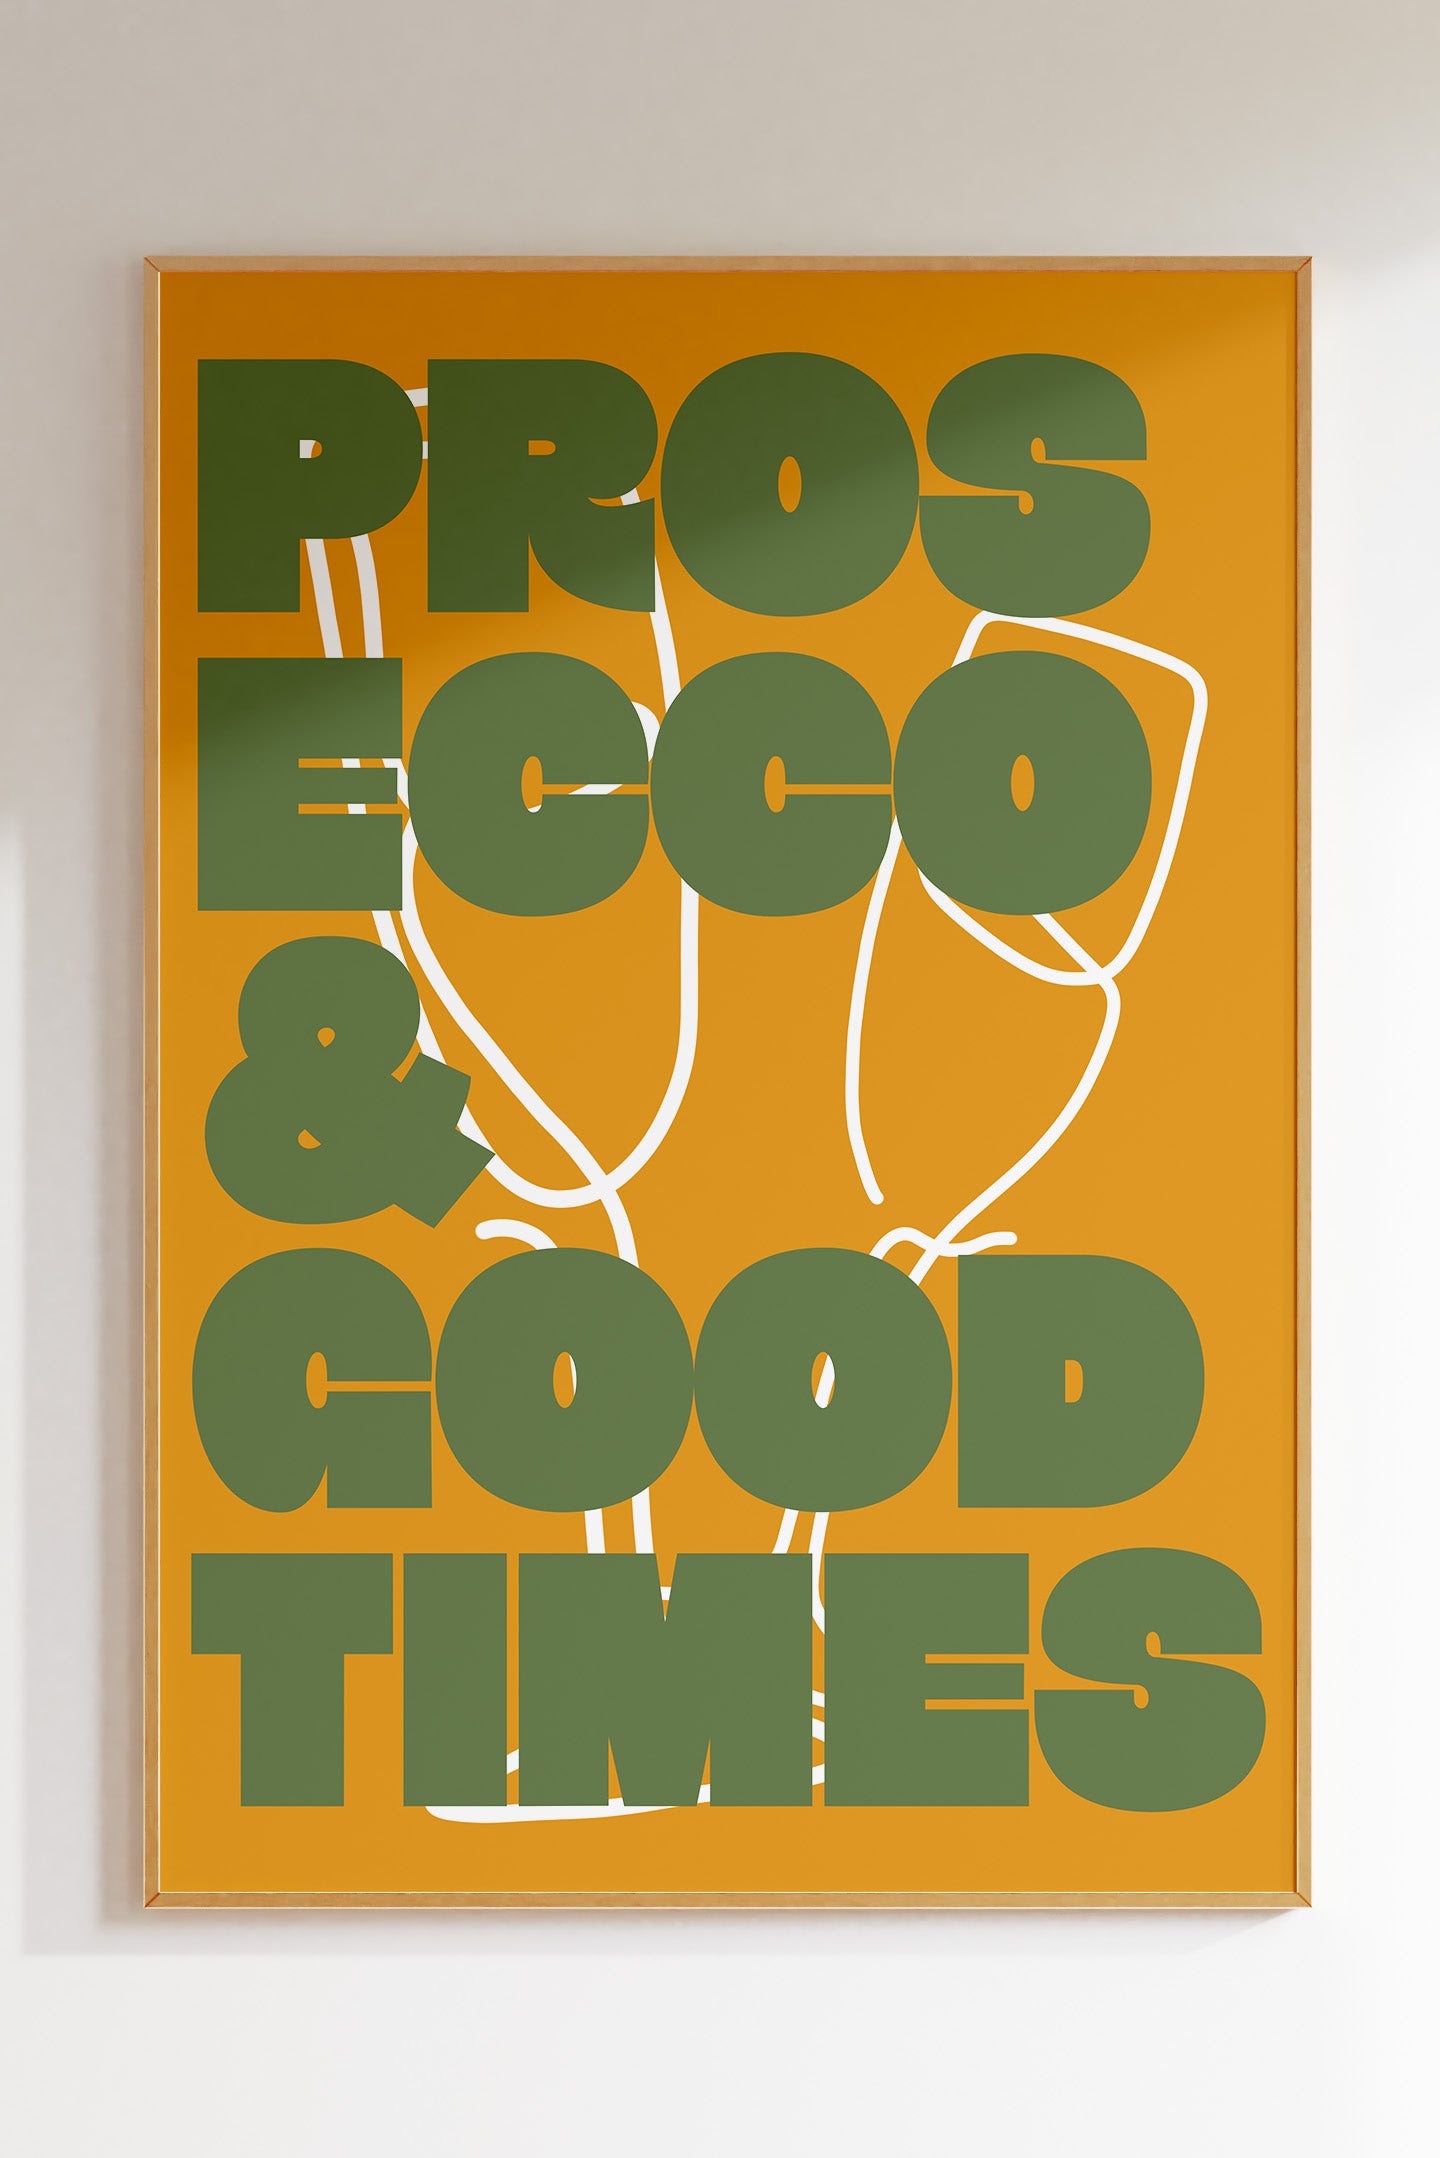 Prosecco & Good Times (More Colours)